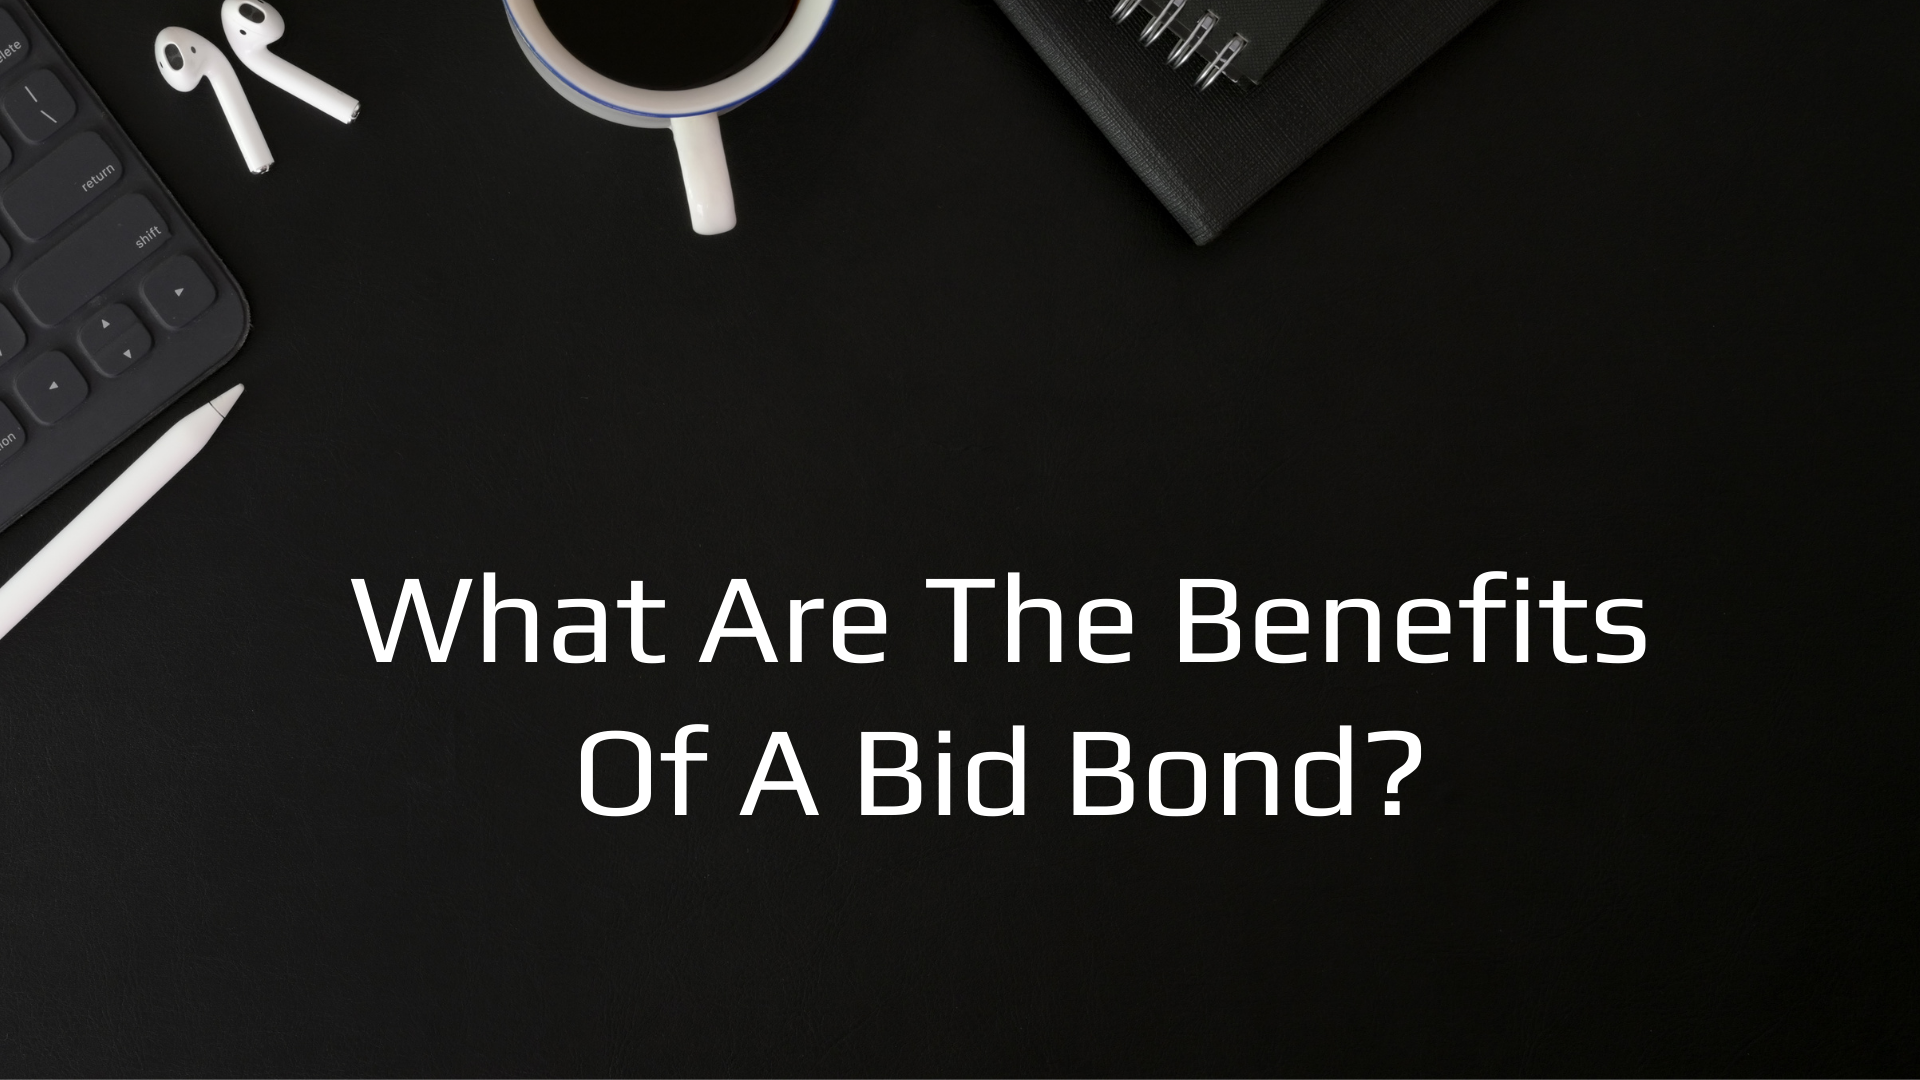 bid bond - What are the benefits of having a bid bond - black workspace